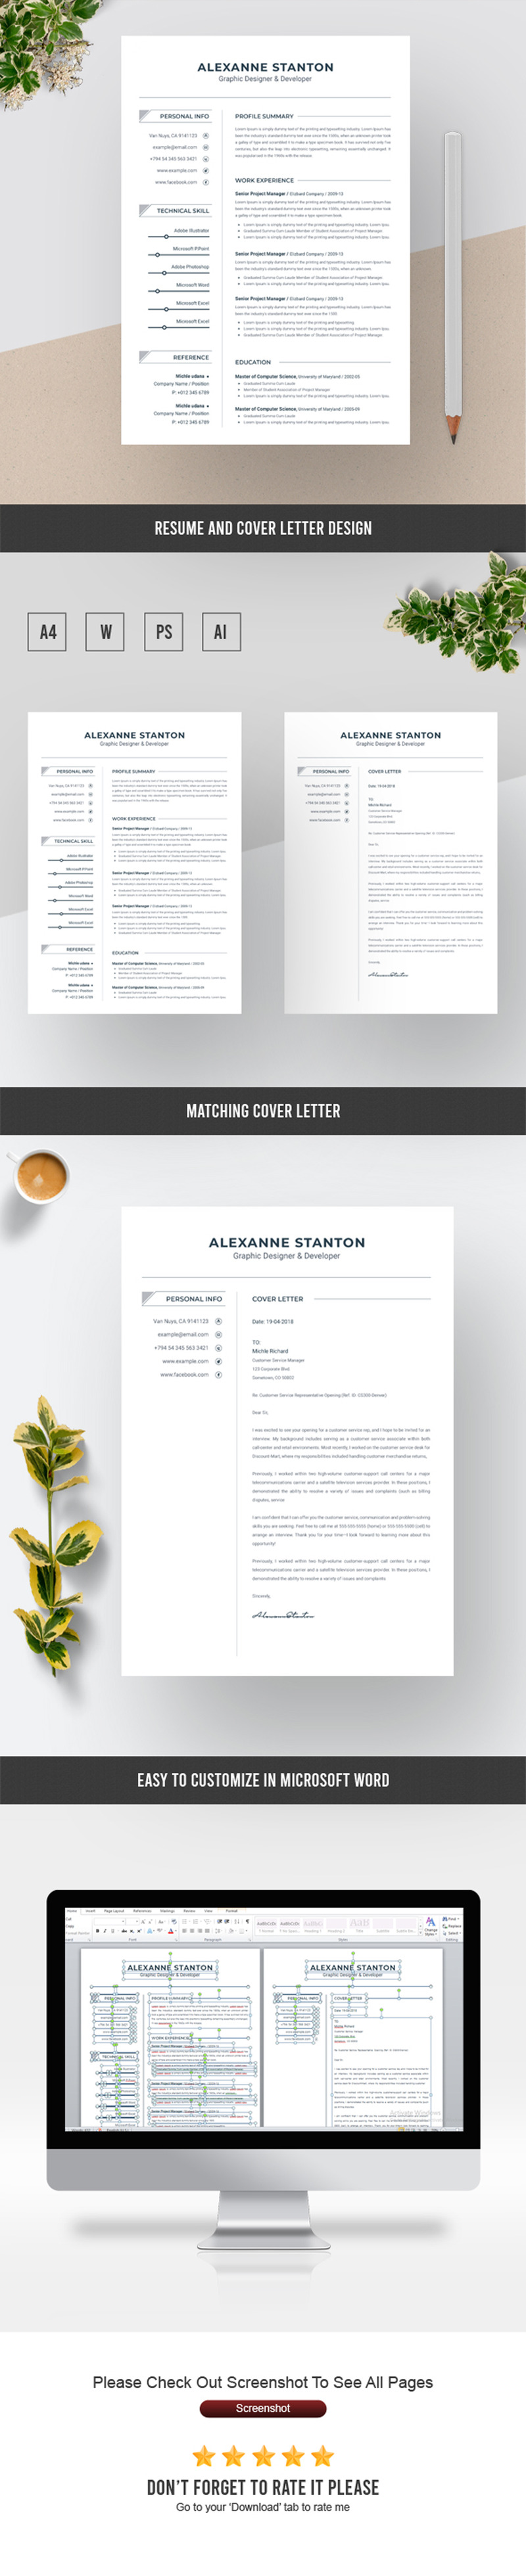 Alexanne Stanton Clean Resume Template - TemplateMonster